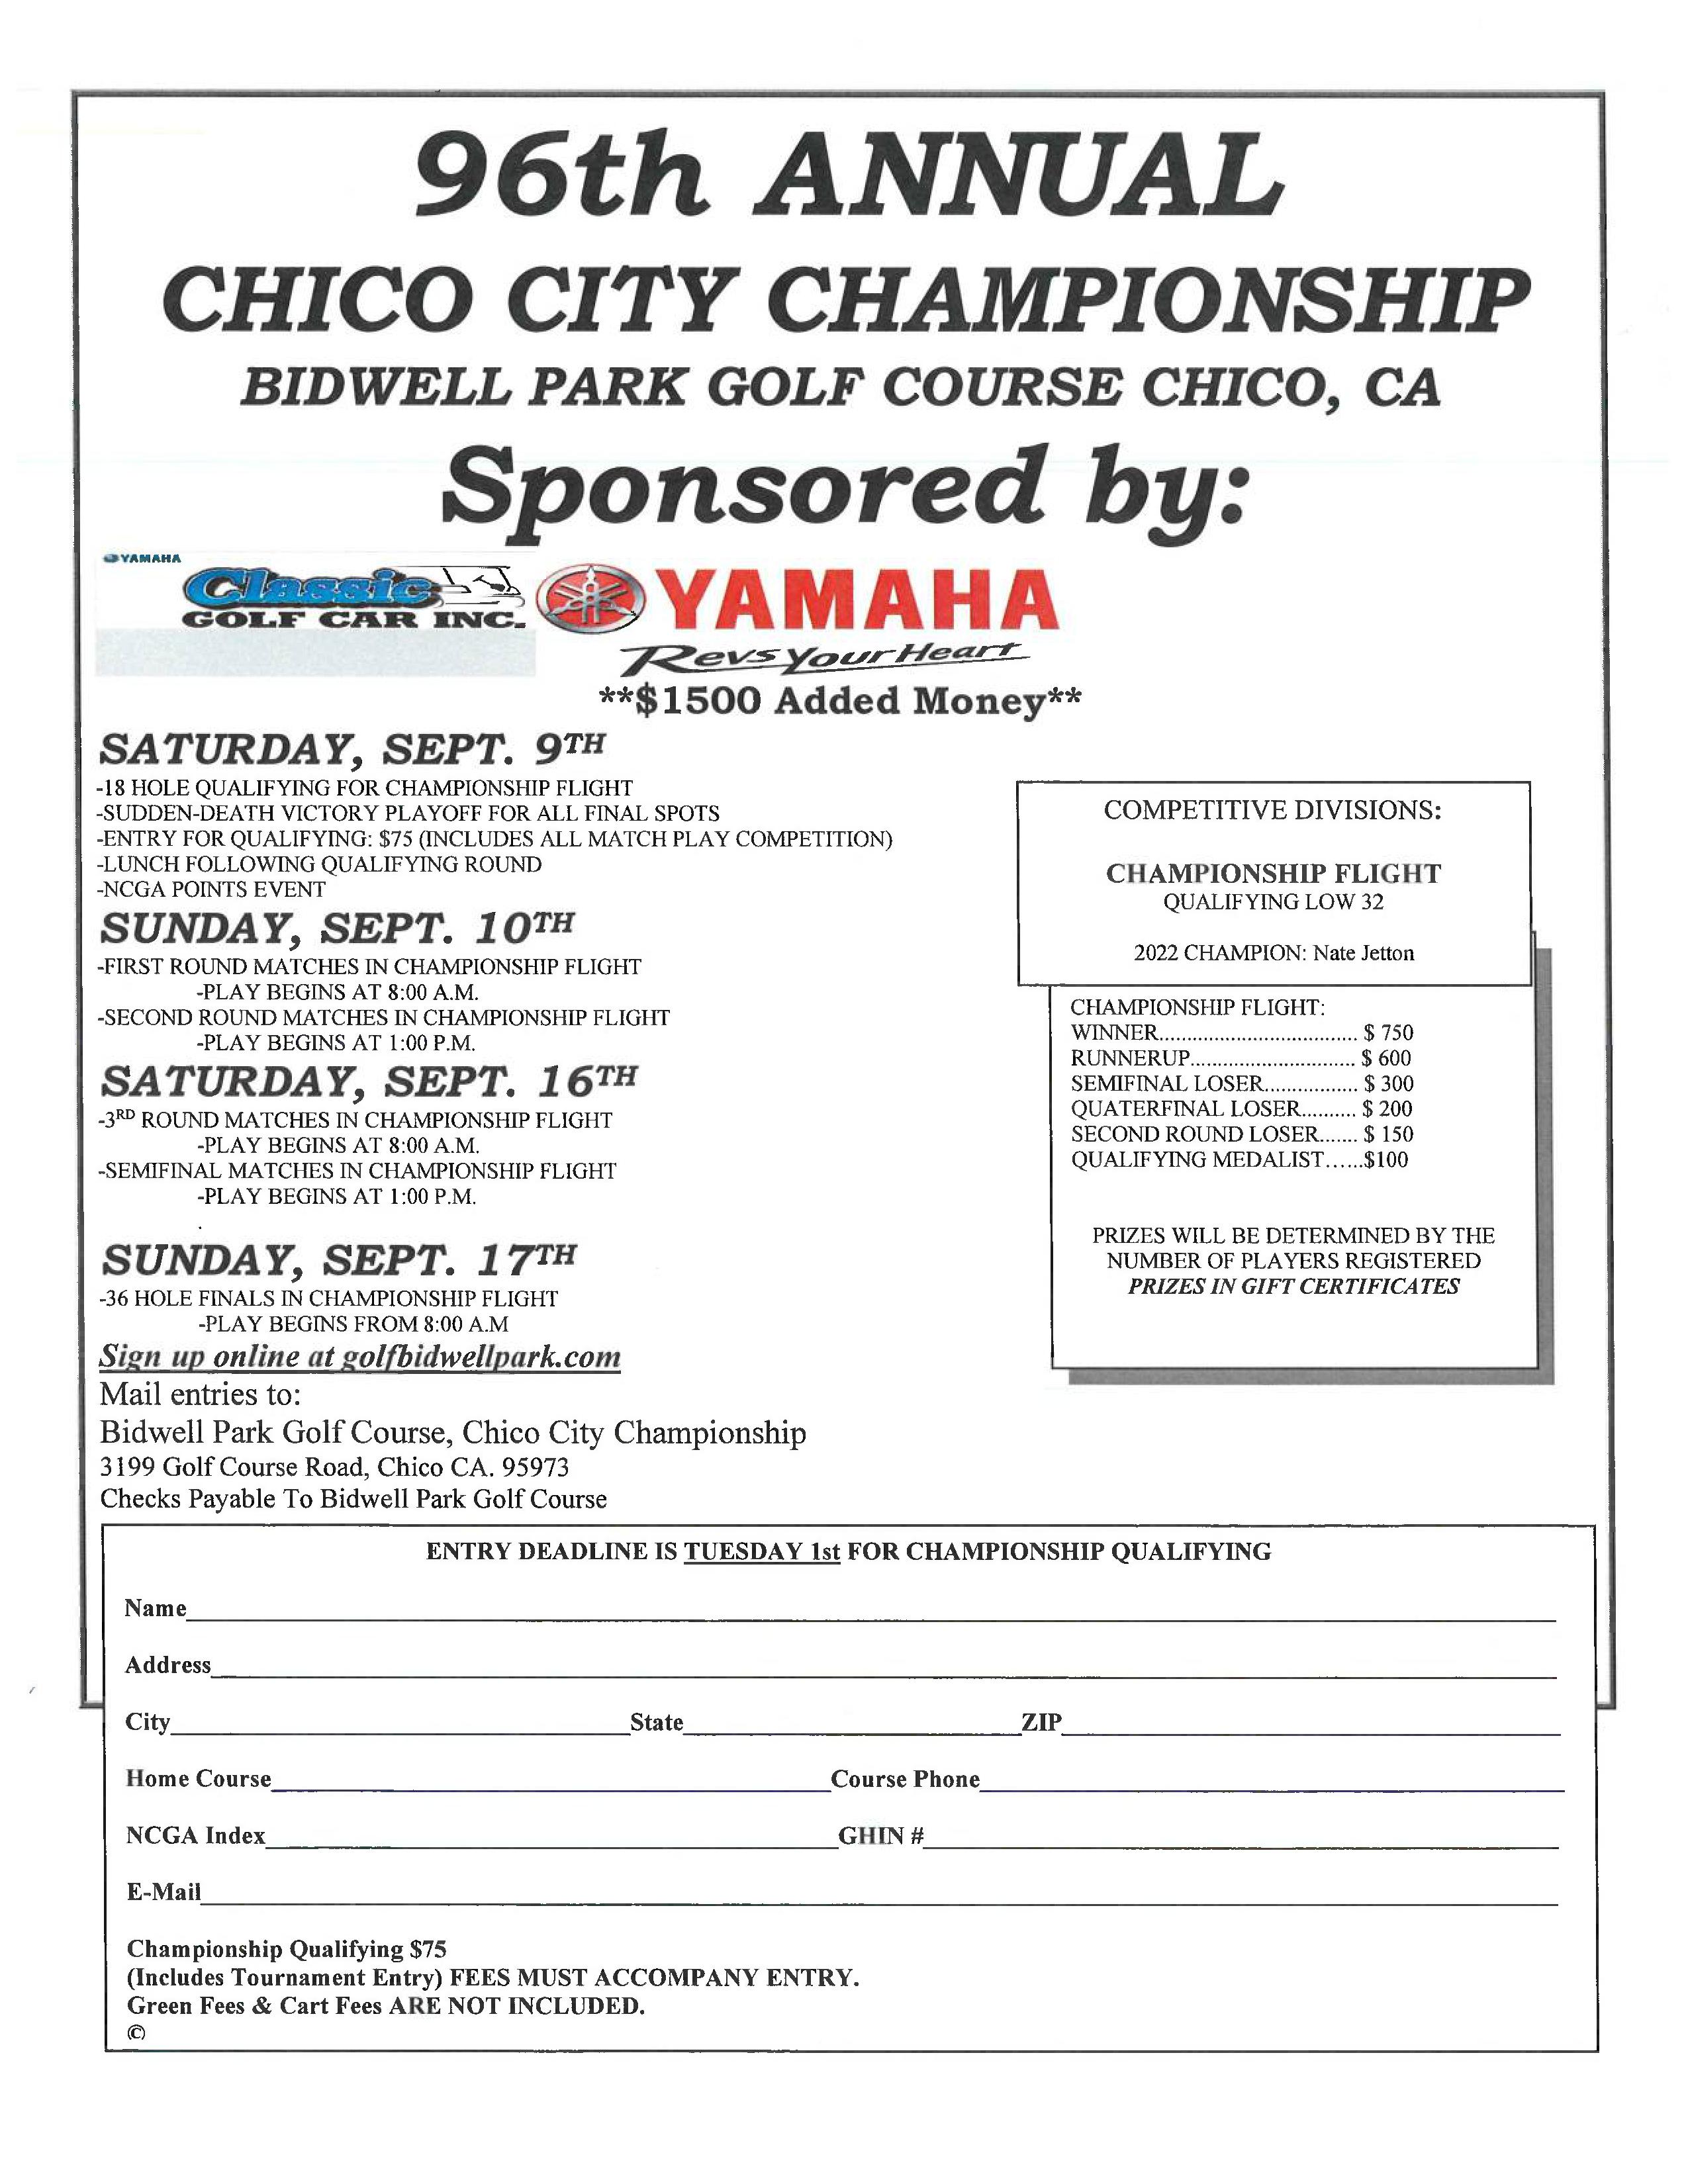 96th Chico City Championship